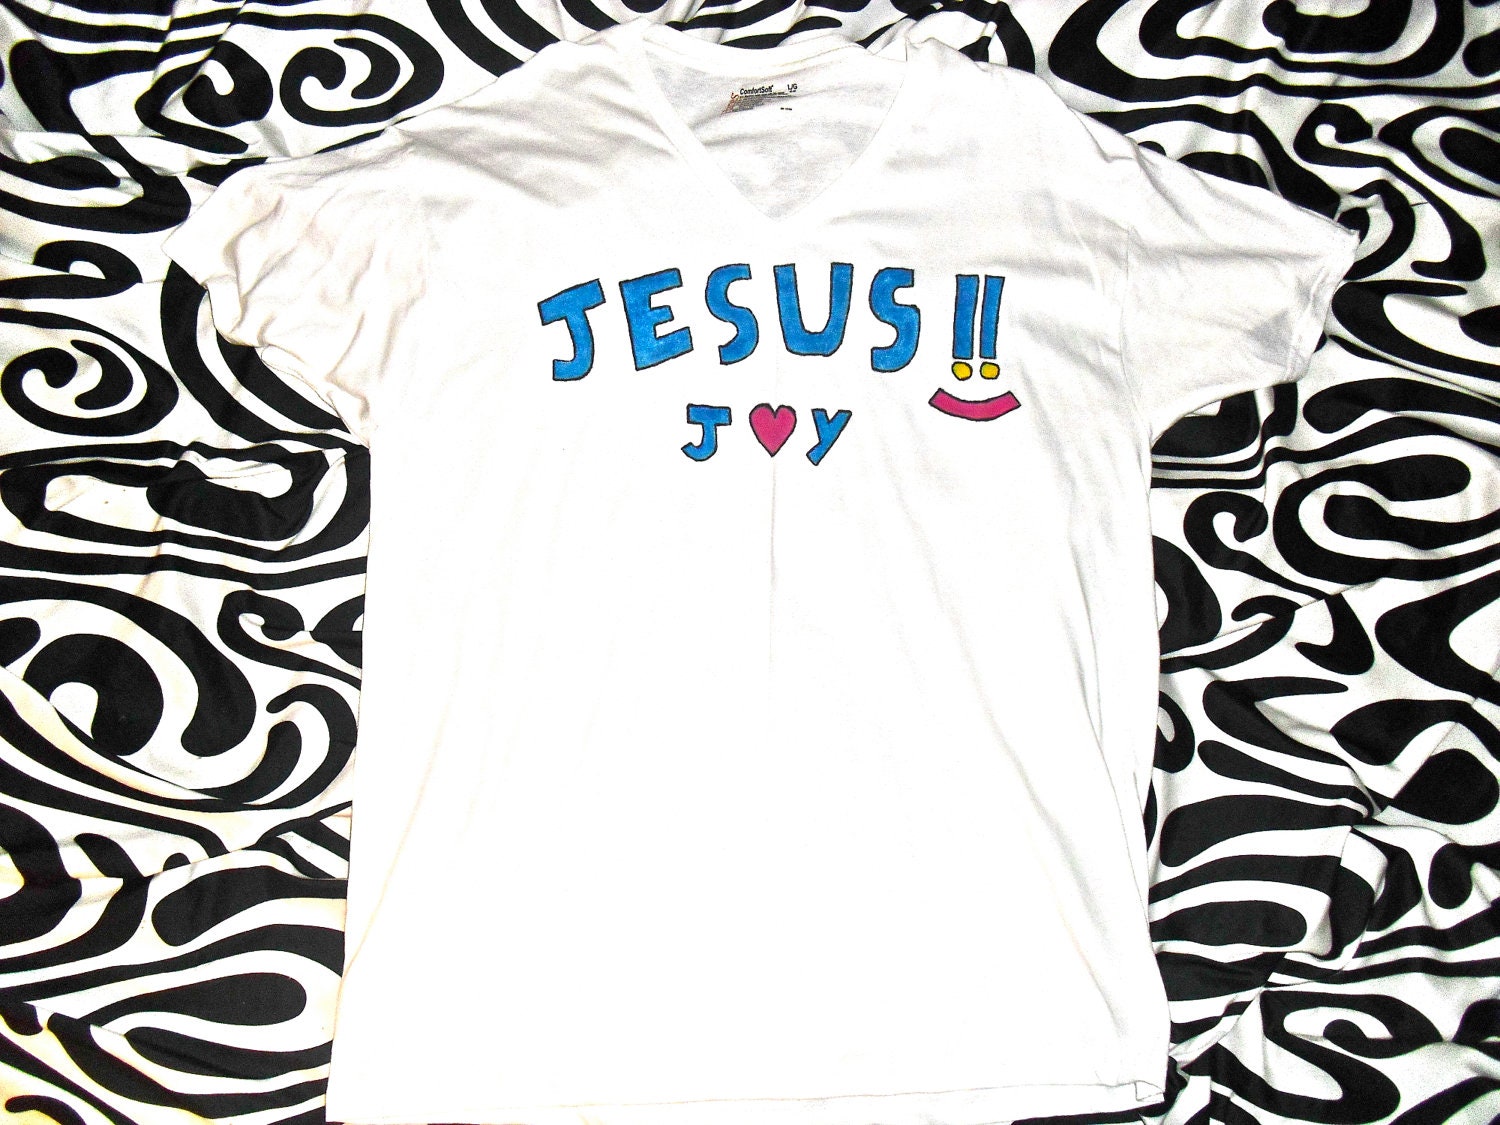 Jesus Joy Hand Painted Shirt